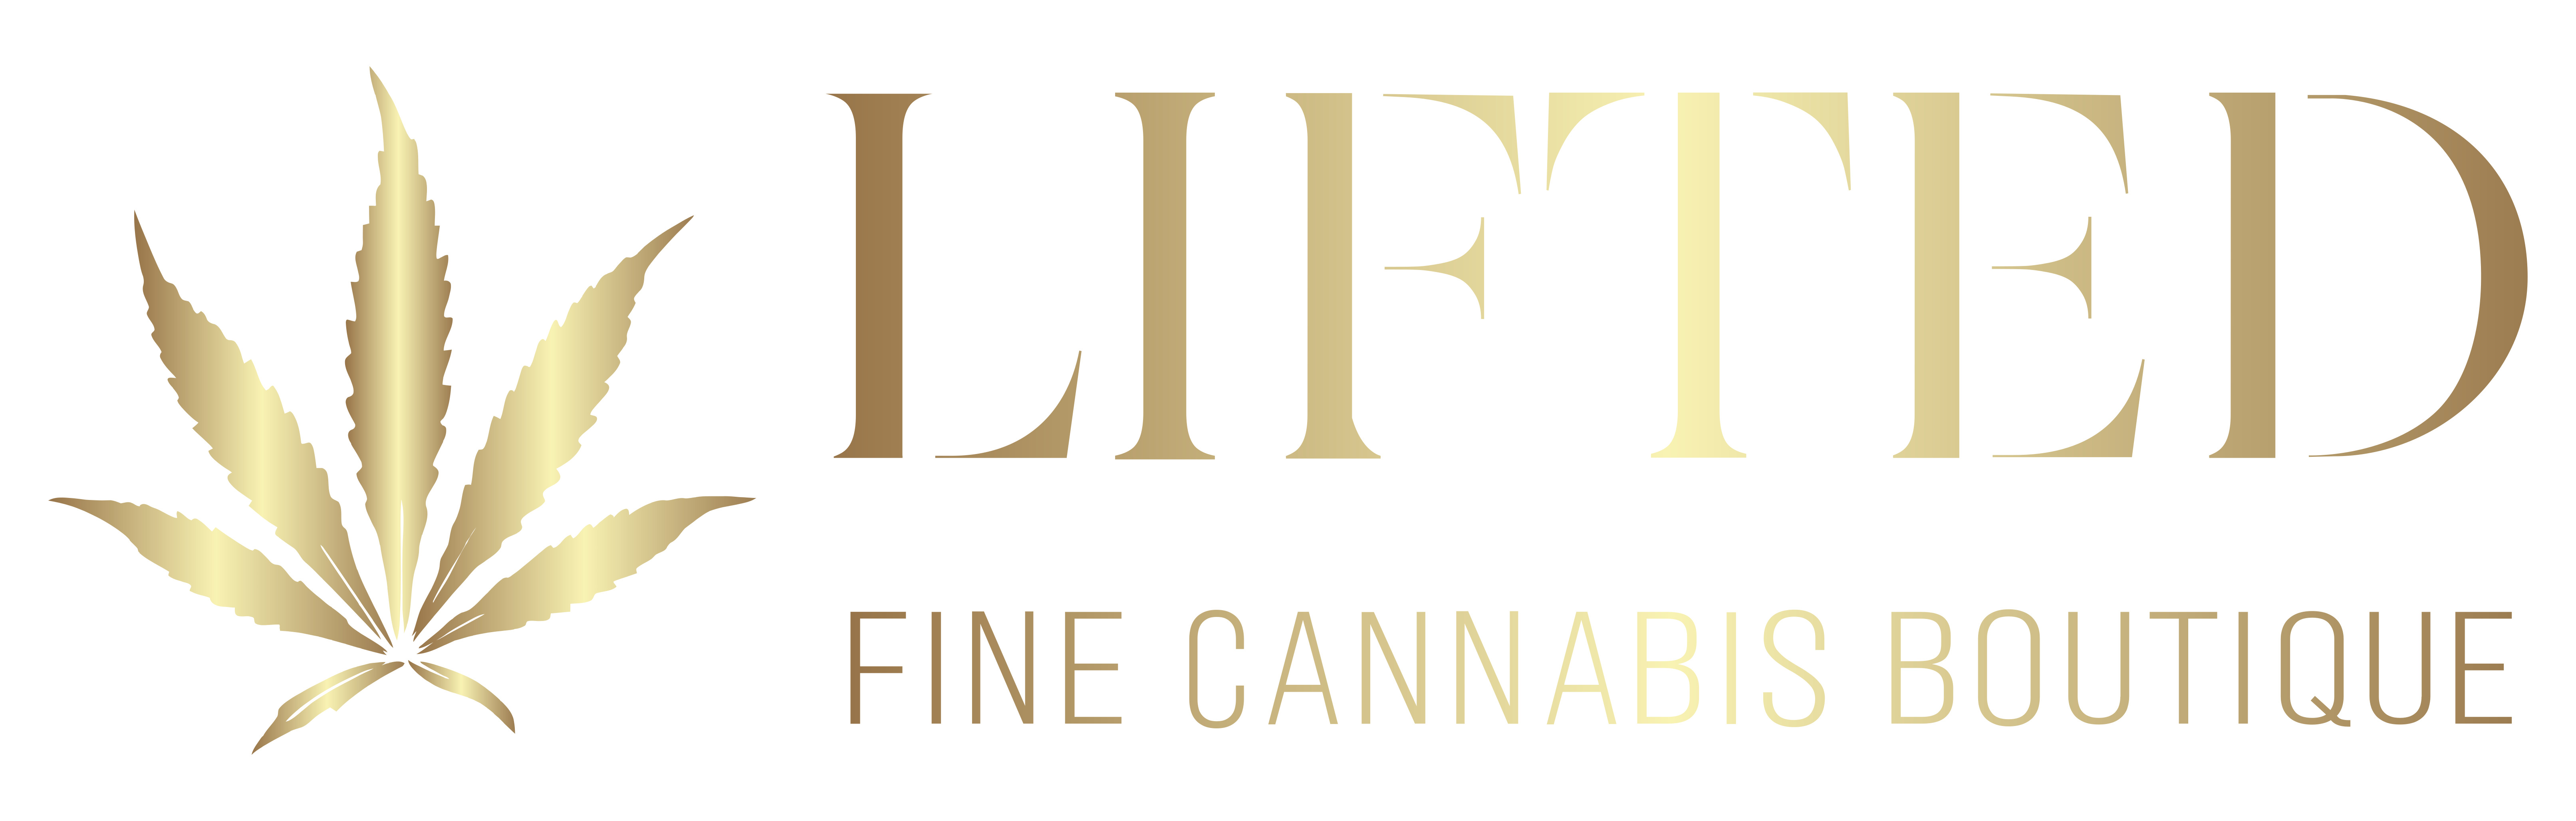 Lifted-Fine-Cannabis-Boutique-Dispensary-horizontal-logo-01.jpeg